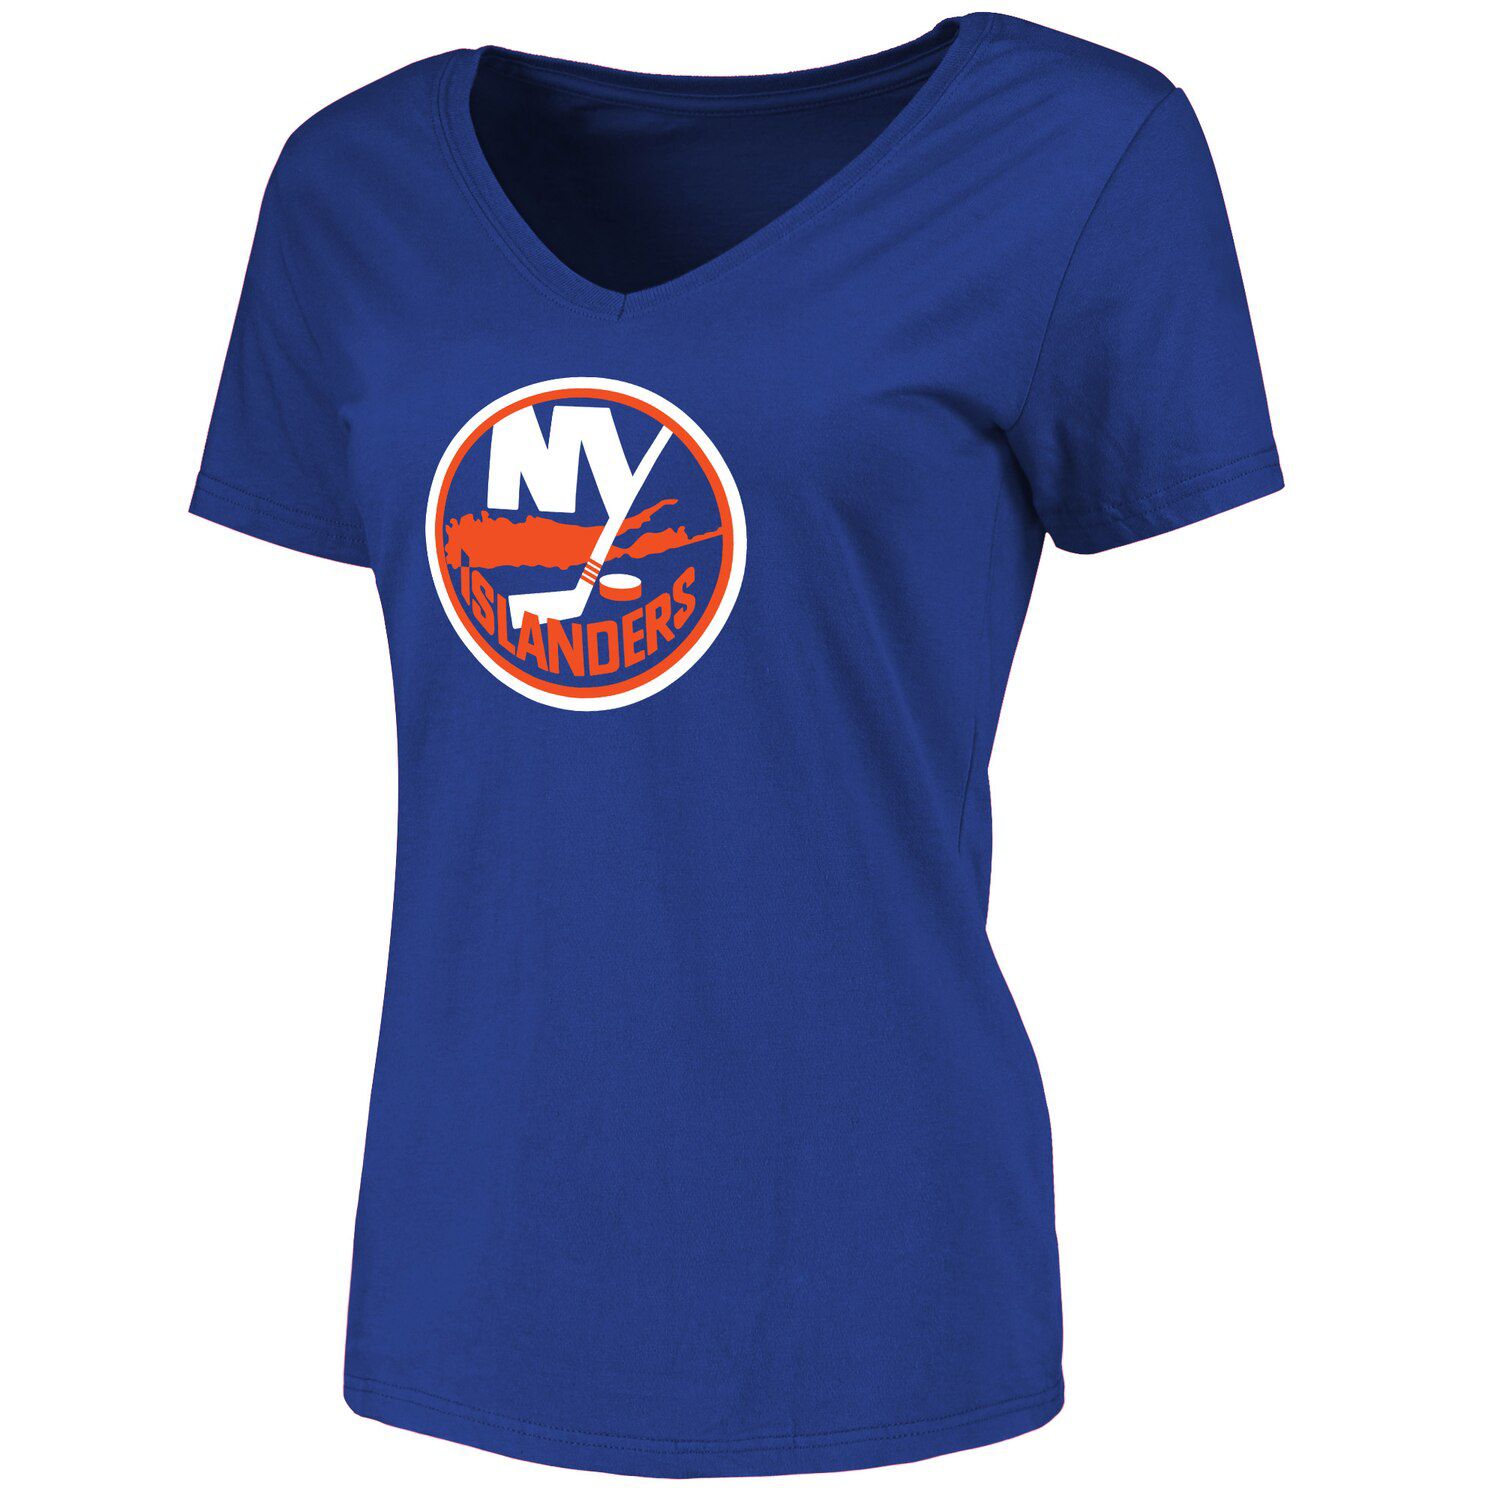 new york islanders tee shirts